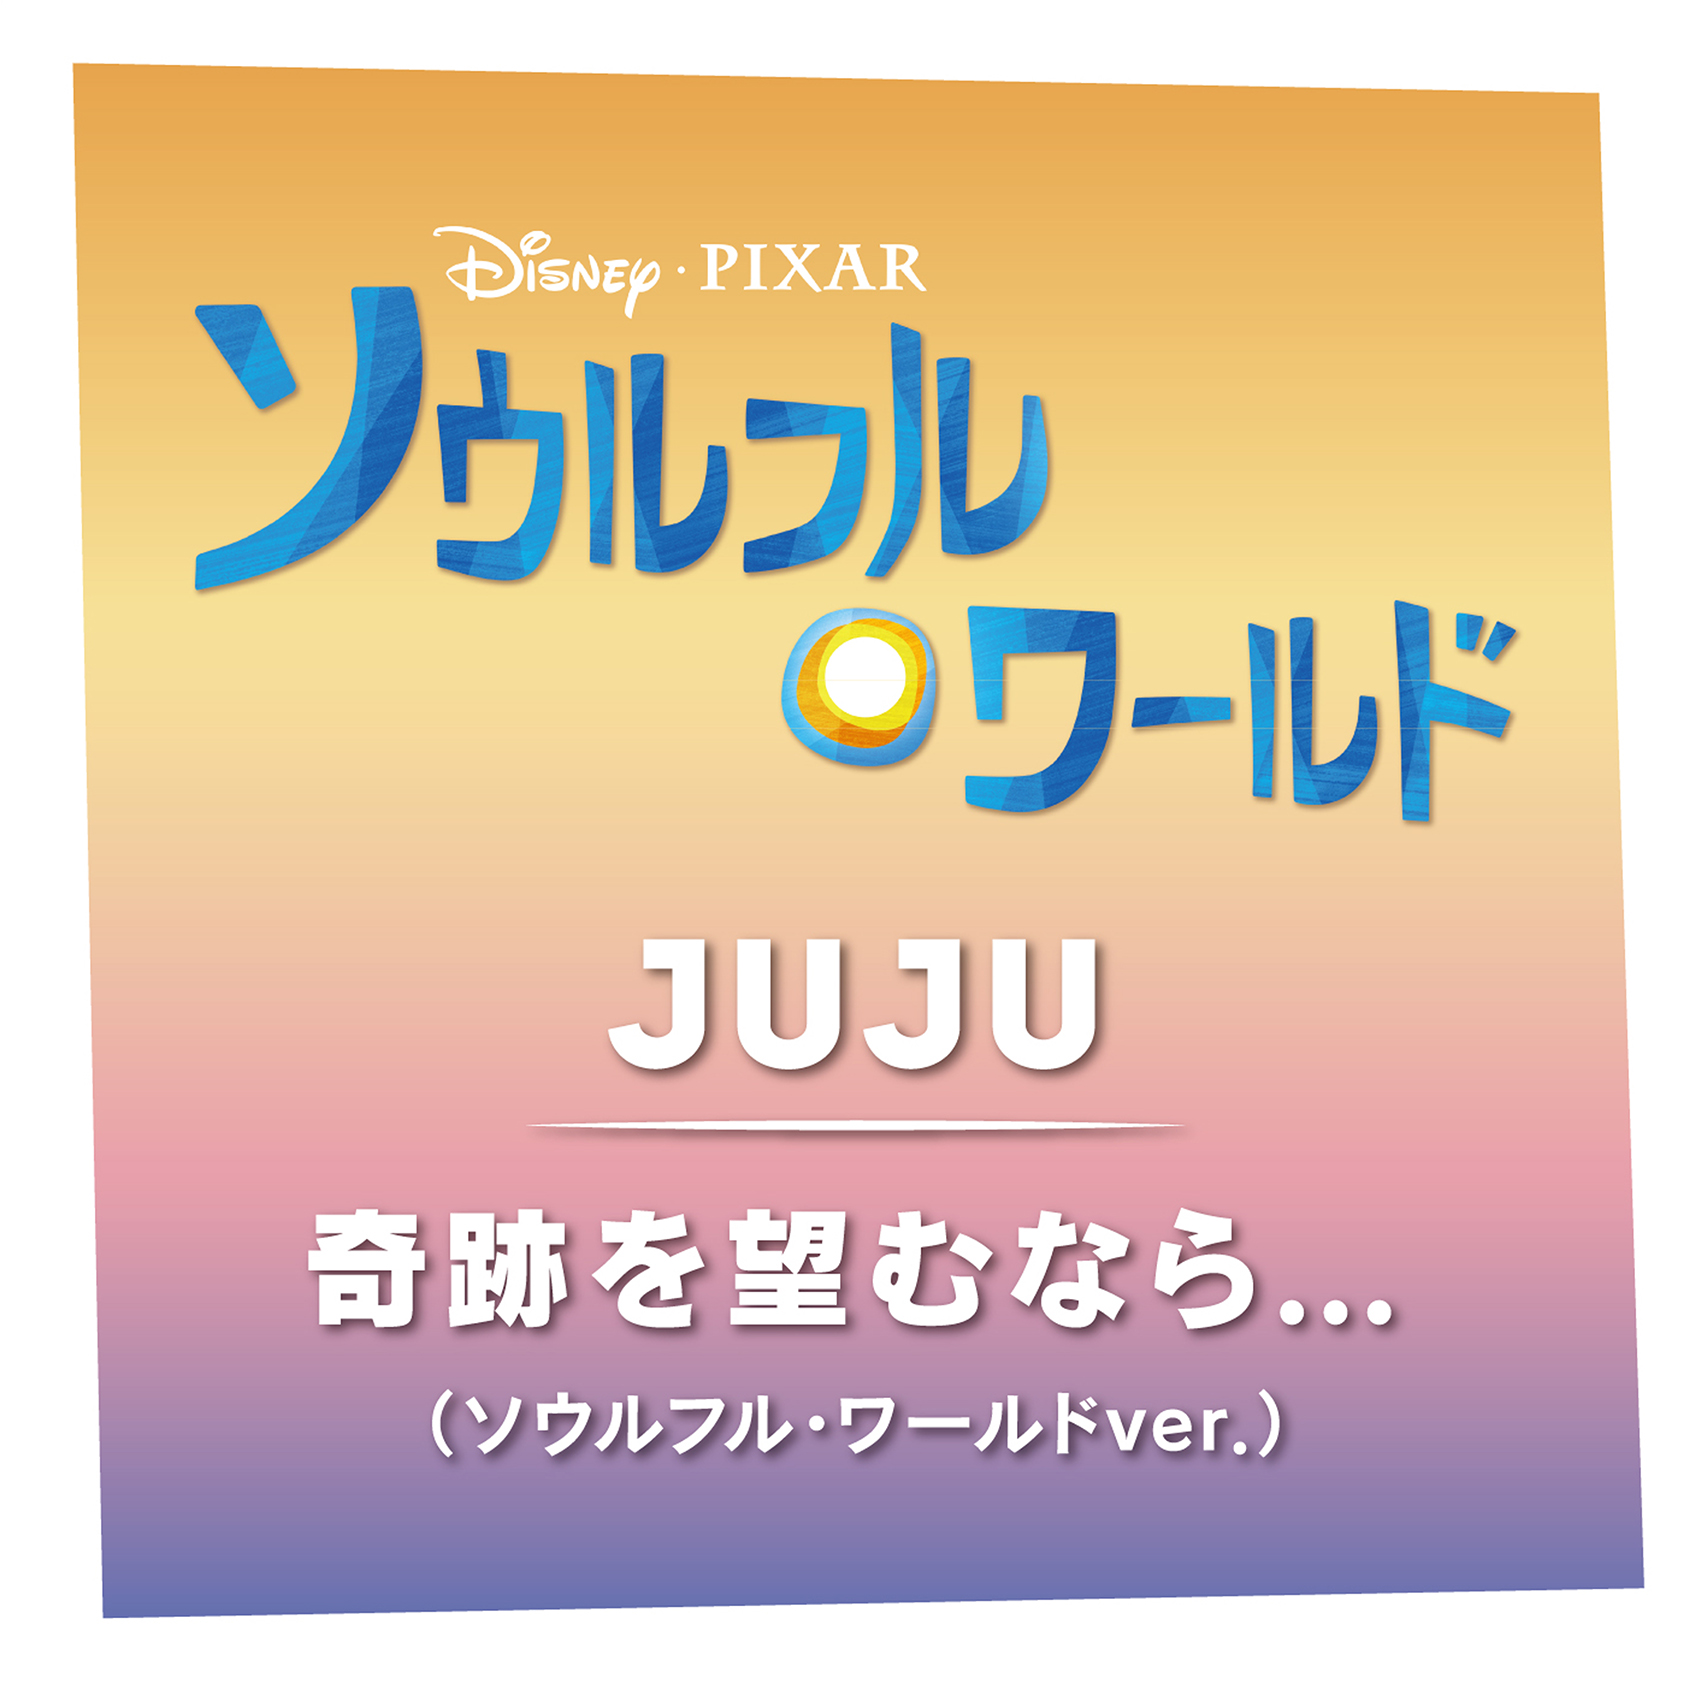 Jujuが歌う映画 ソウルフル ワールド の日本版エンドソング先行配信開始 オリジナル サウンドトラックも発売決定 Disney Music